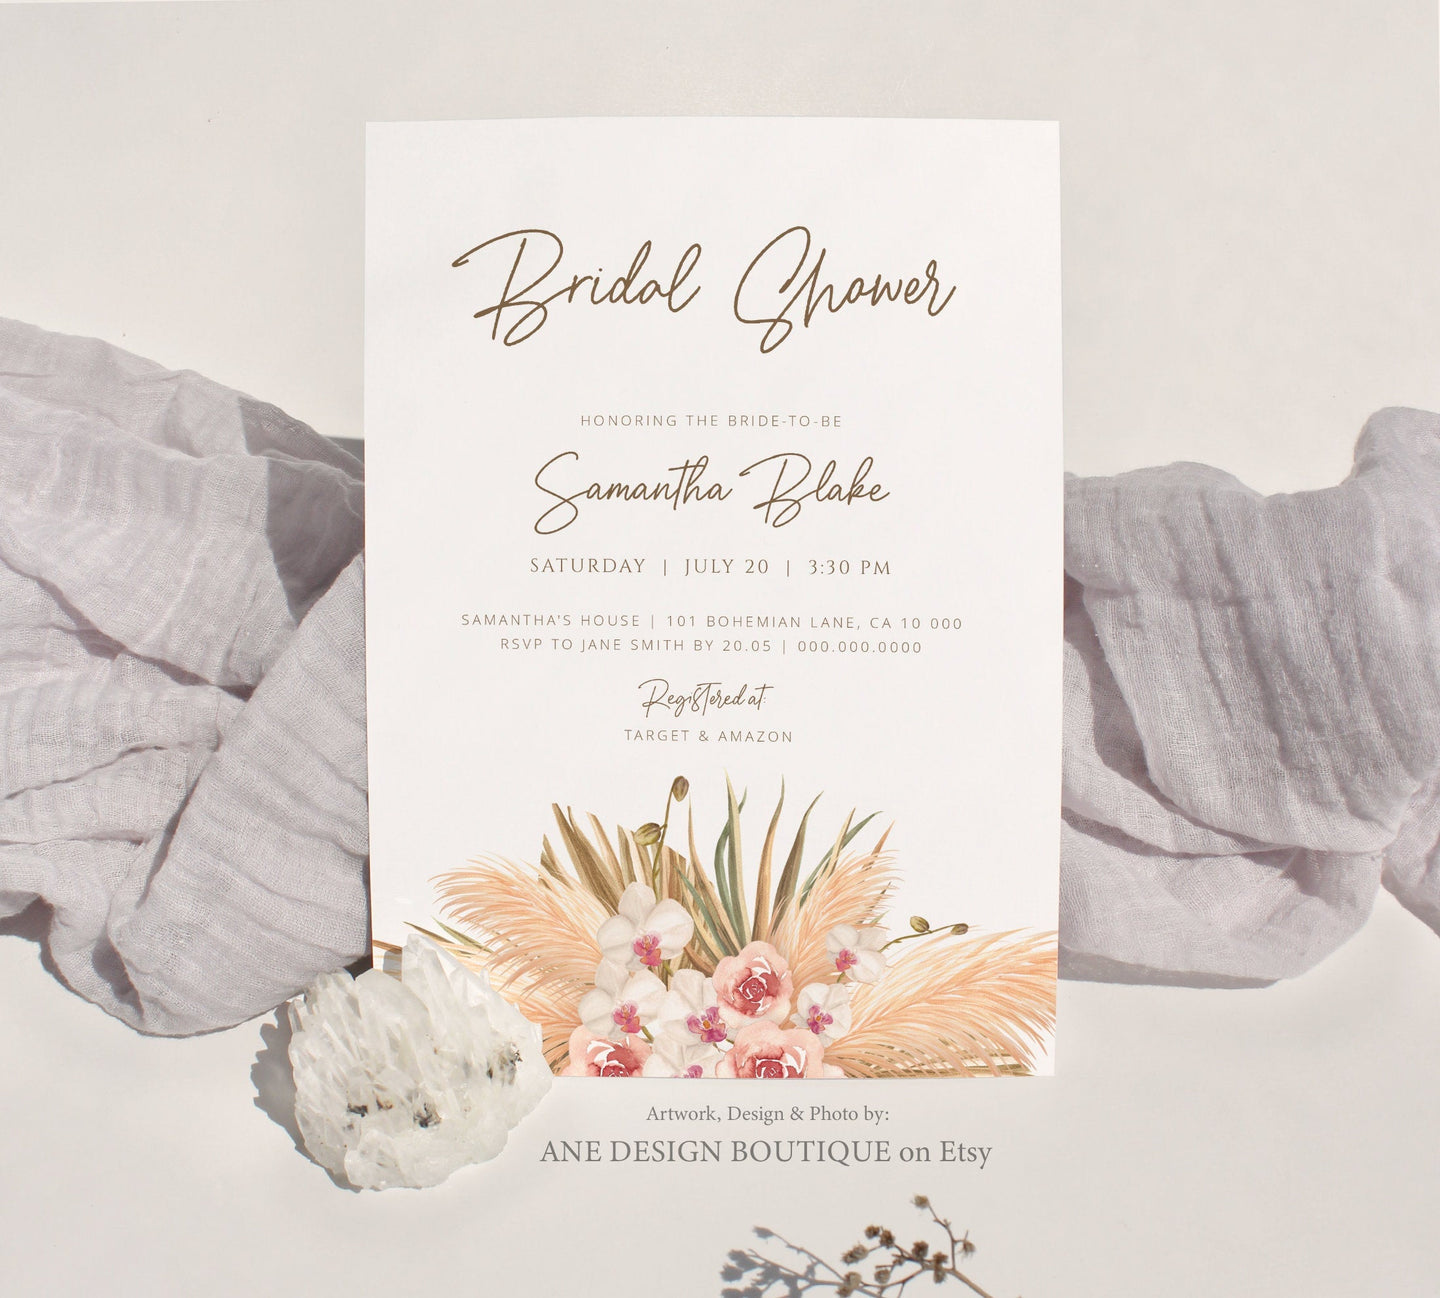 Pampas Grass Bridal Shower Invitation Template, Bohemian, DIY Boho Invites, Desert, Original Artwork, Fully Editable, Printable Download 017